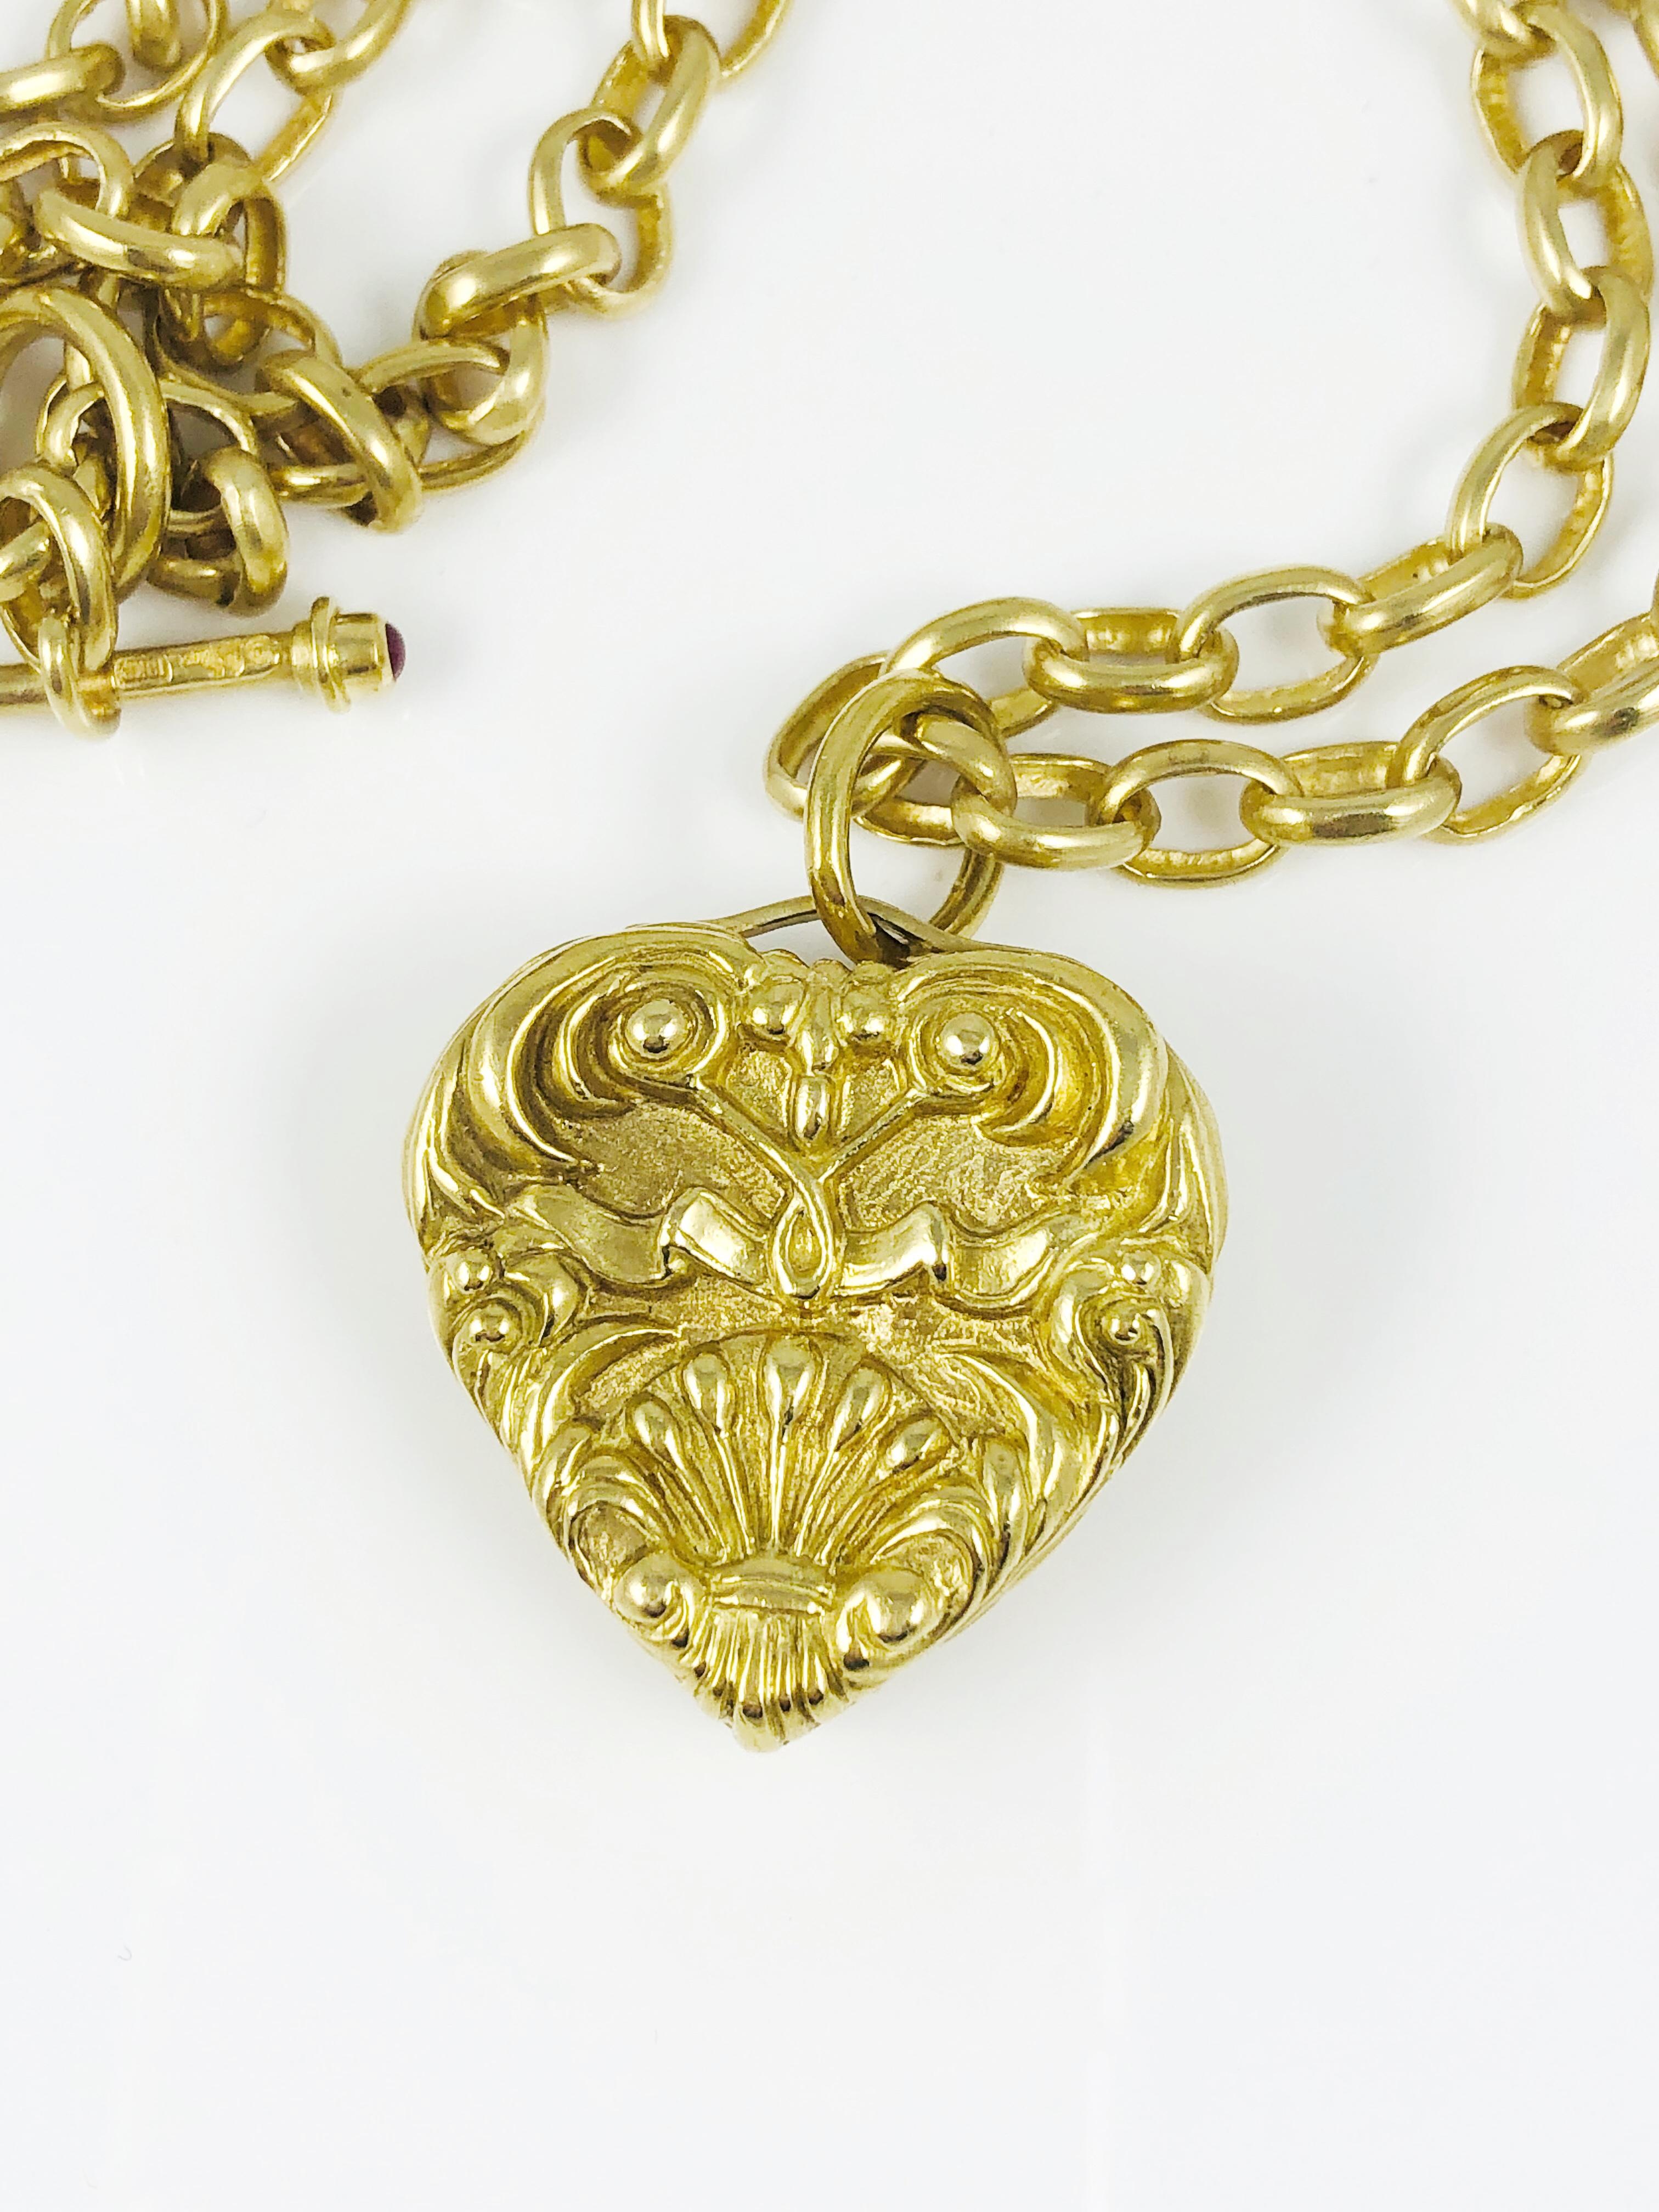 Round Cut Marlene Stowe 18 Karat Yellow Gold Heart Pendant and Link Chain